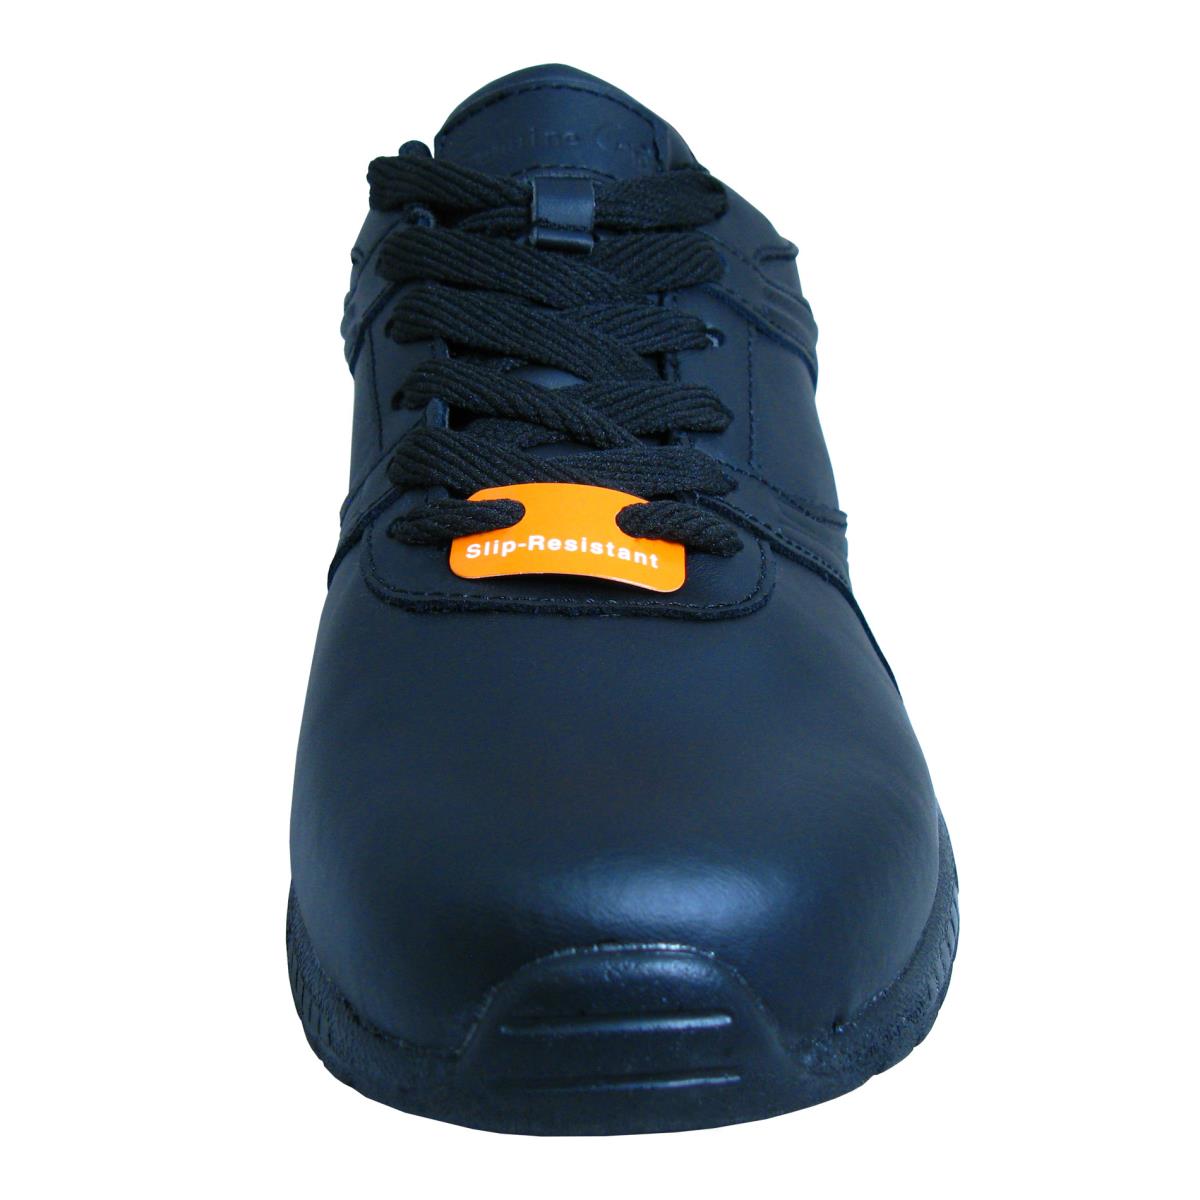 Genuine Grip Footwear- 130 Black Women's Athletic Plain Toe Shoe-eSafety Supplies, Inc